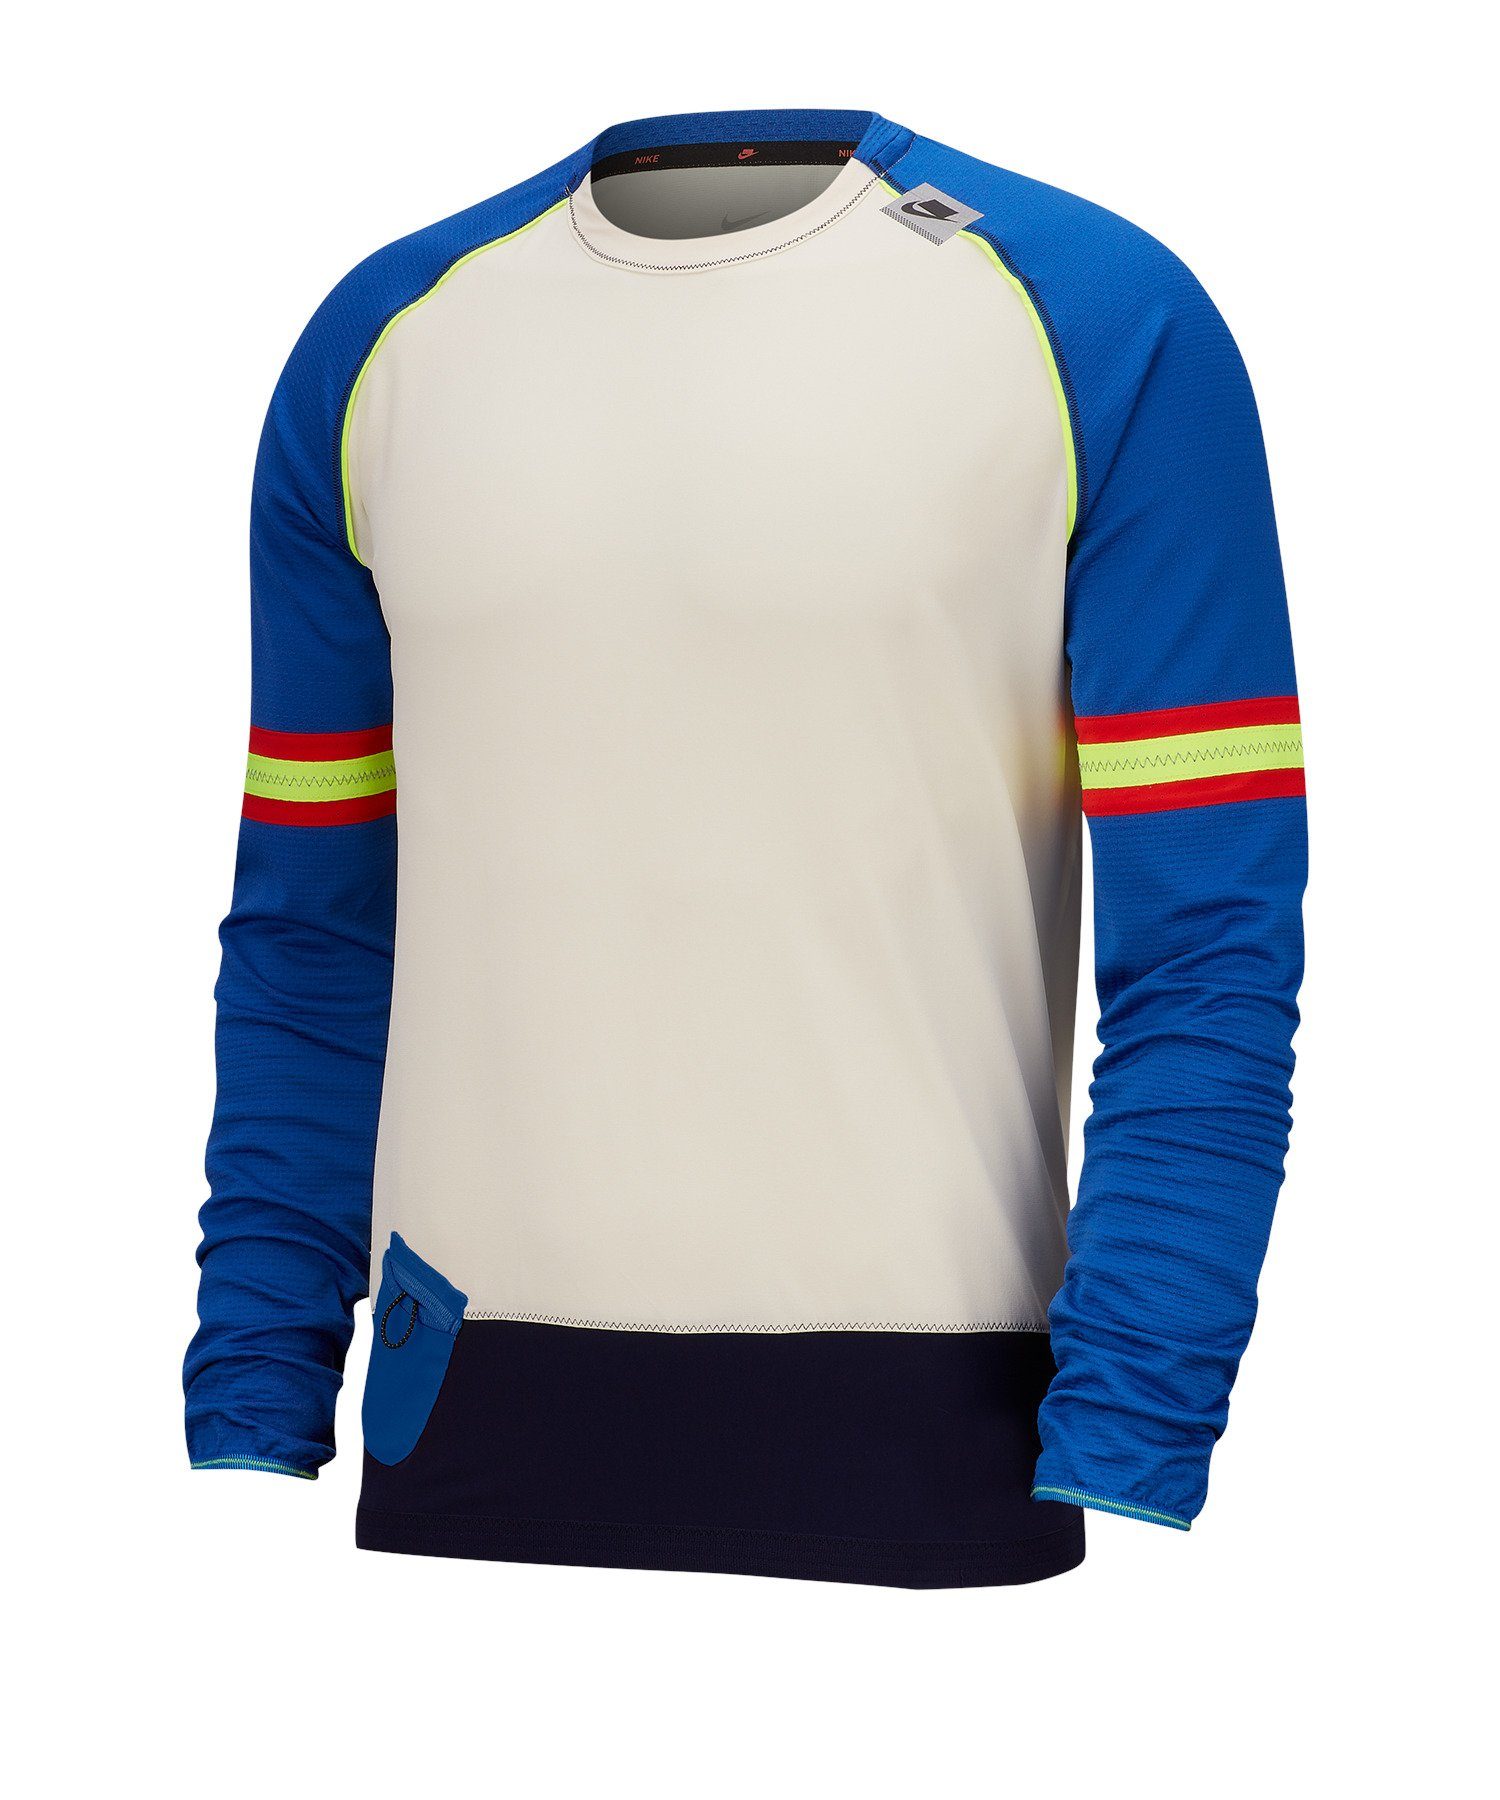 default Long-Sleeve Nike langarm Top Running weissblau Lauftop T-Shirt